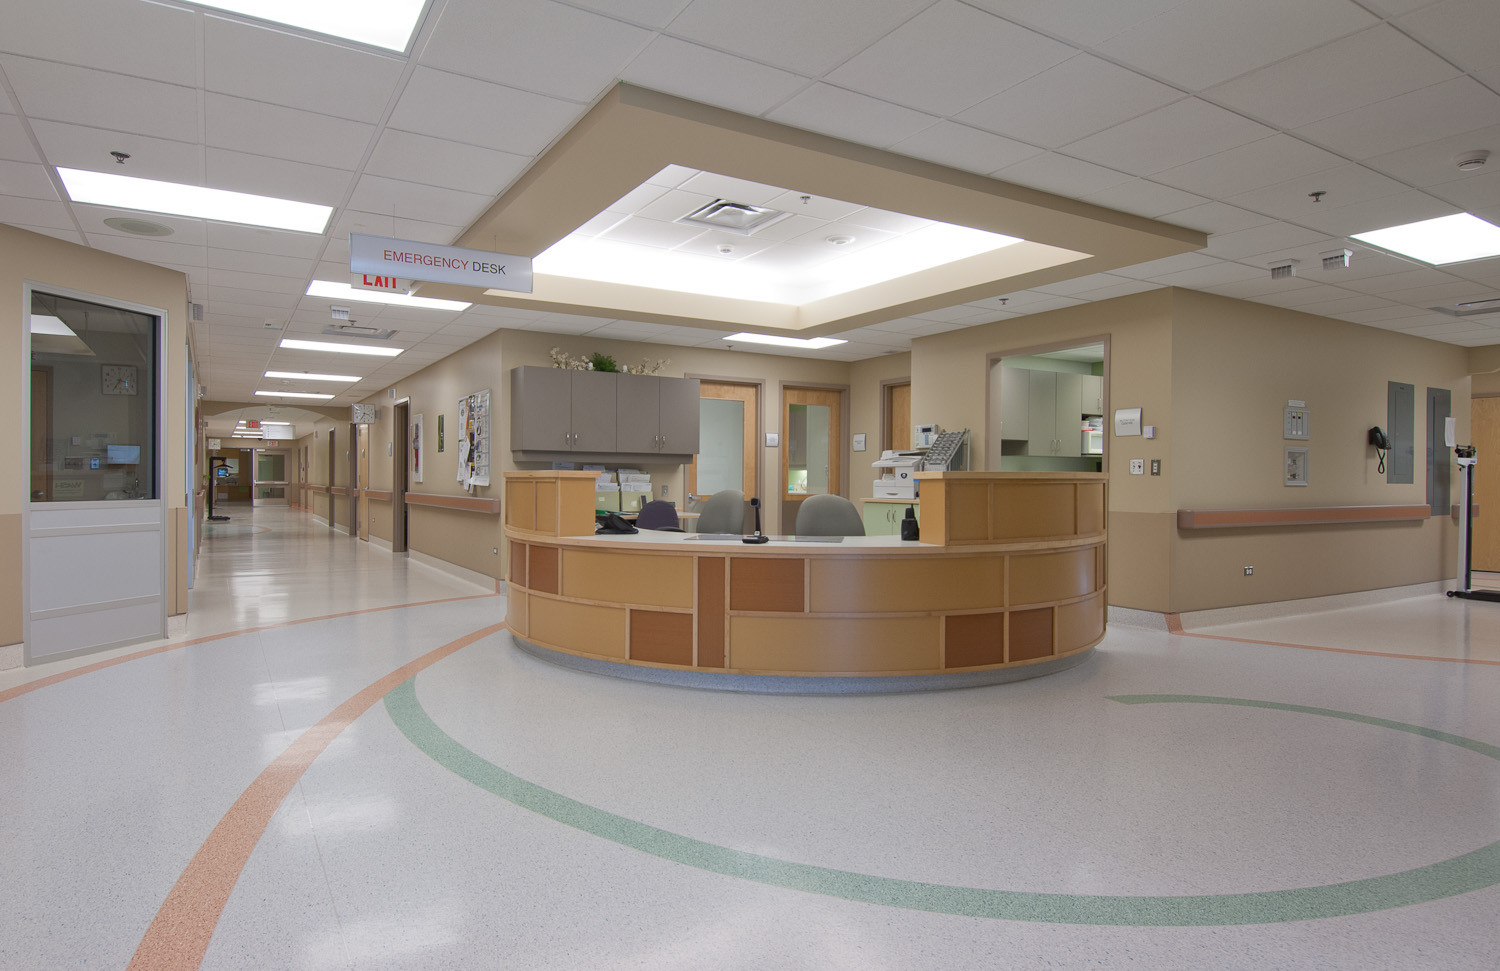 Hospital Lobby by Winnipeg architectural photographer